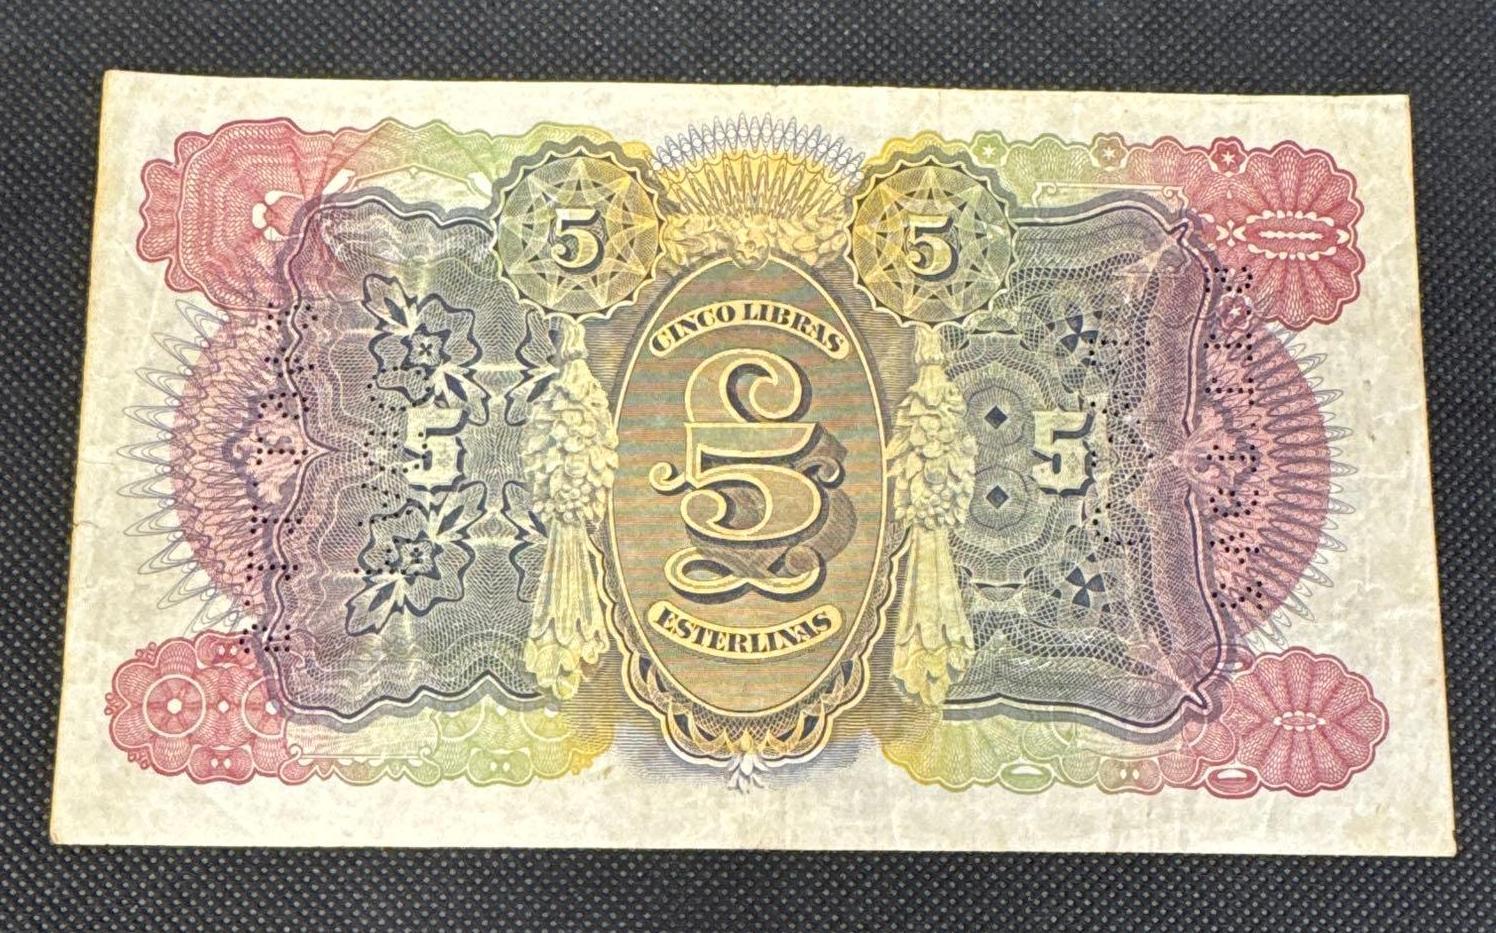 1935 Mozambique 5 Libras Note Crisp Bill